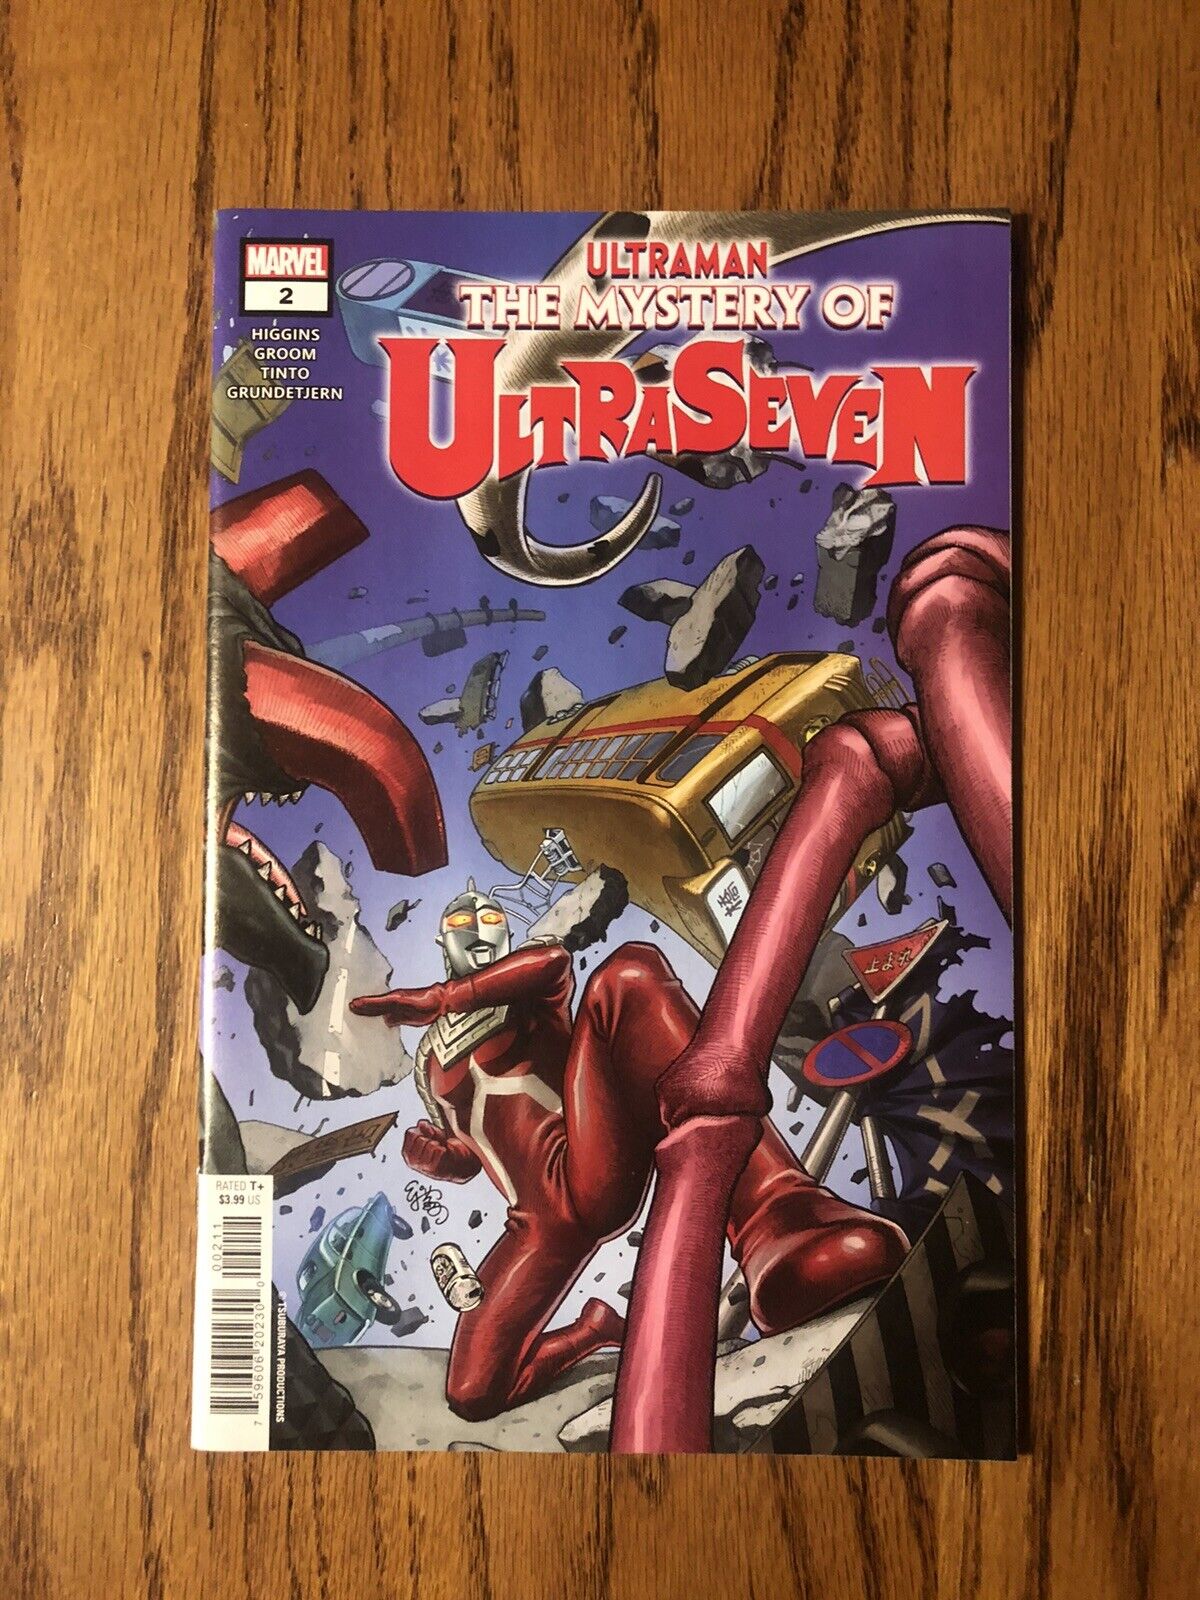 Ultraman: The Mystery of UltraSeven #2 Marvel Comics